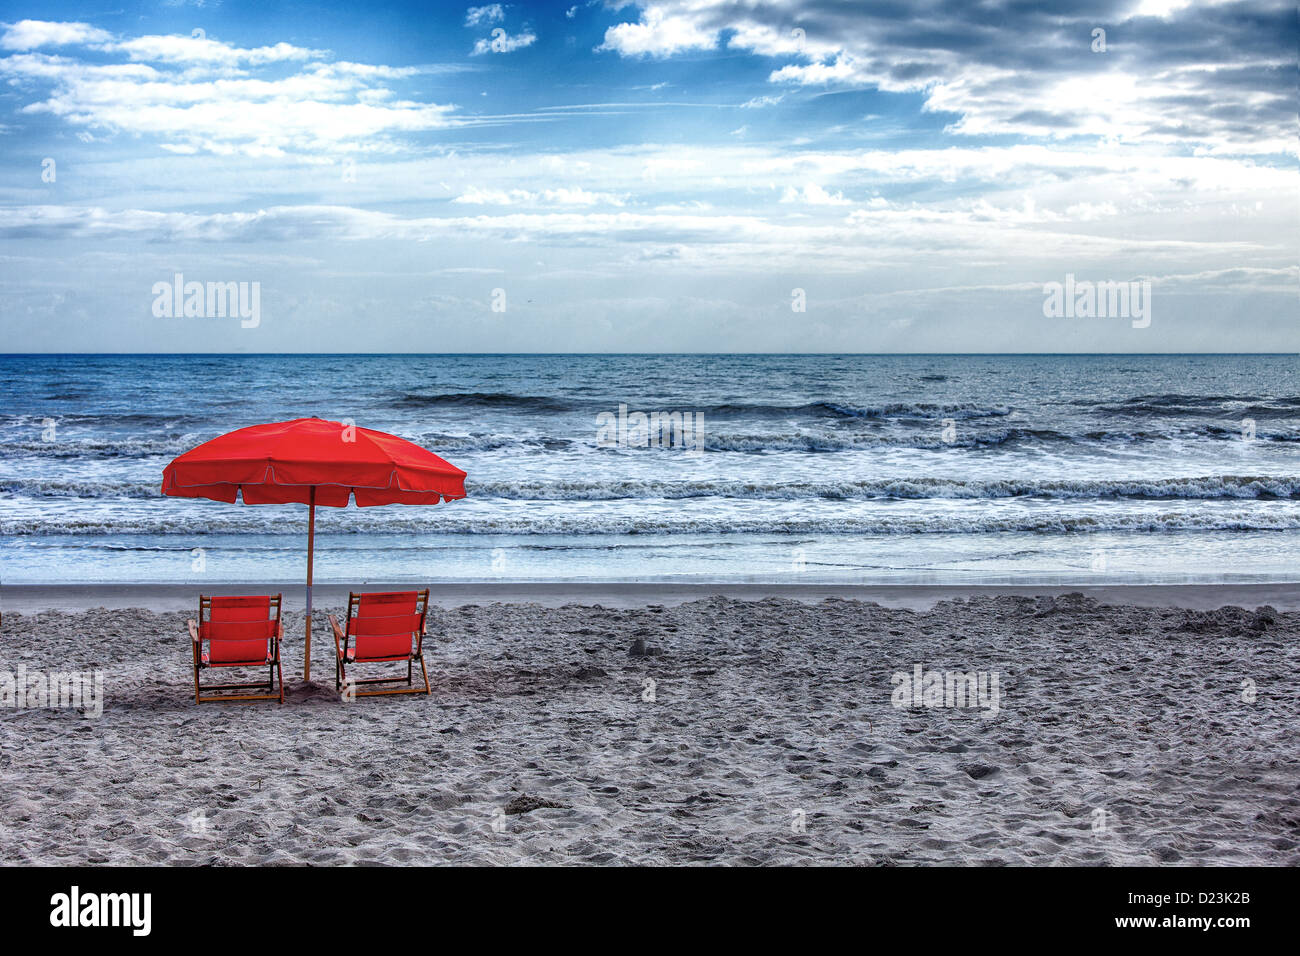 A red and orange umbrella on a Florida beach. Stock Photo